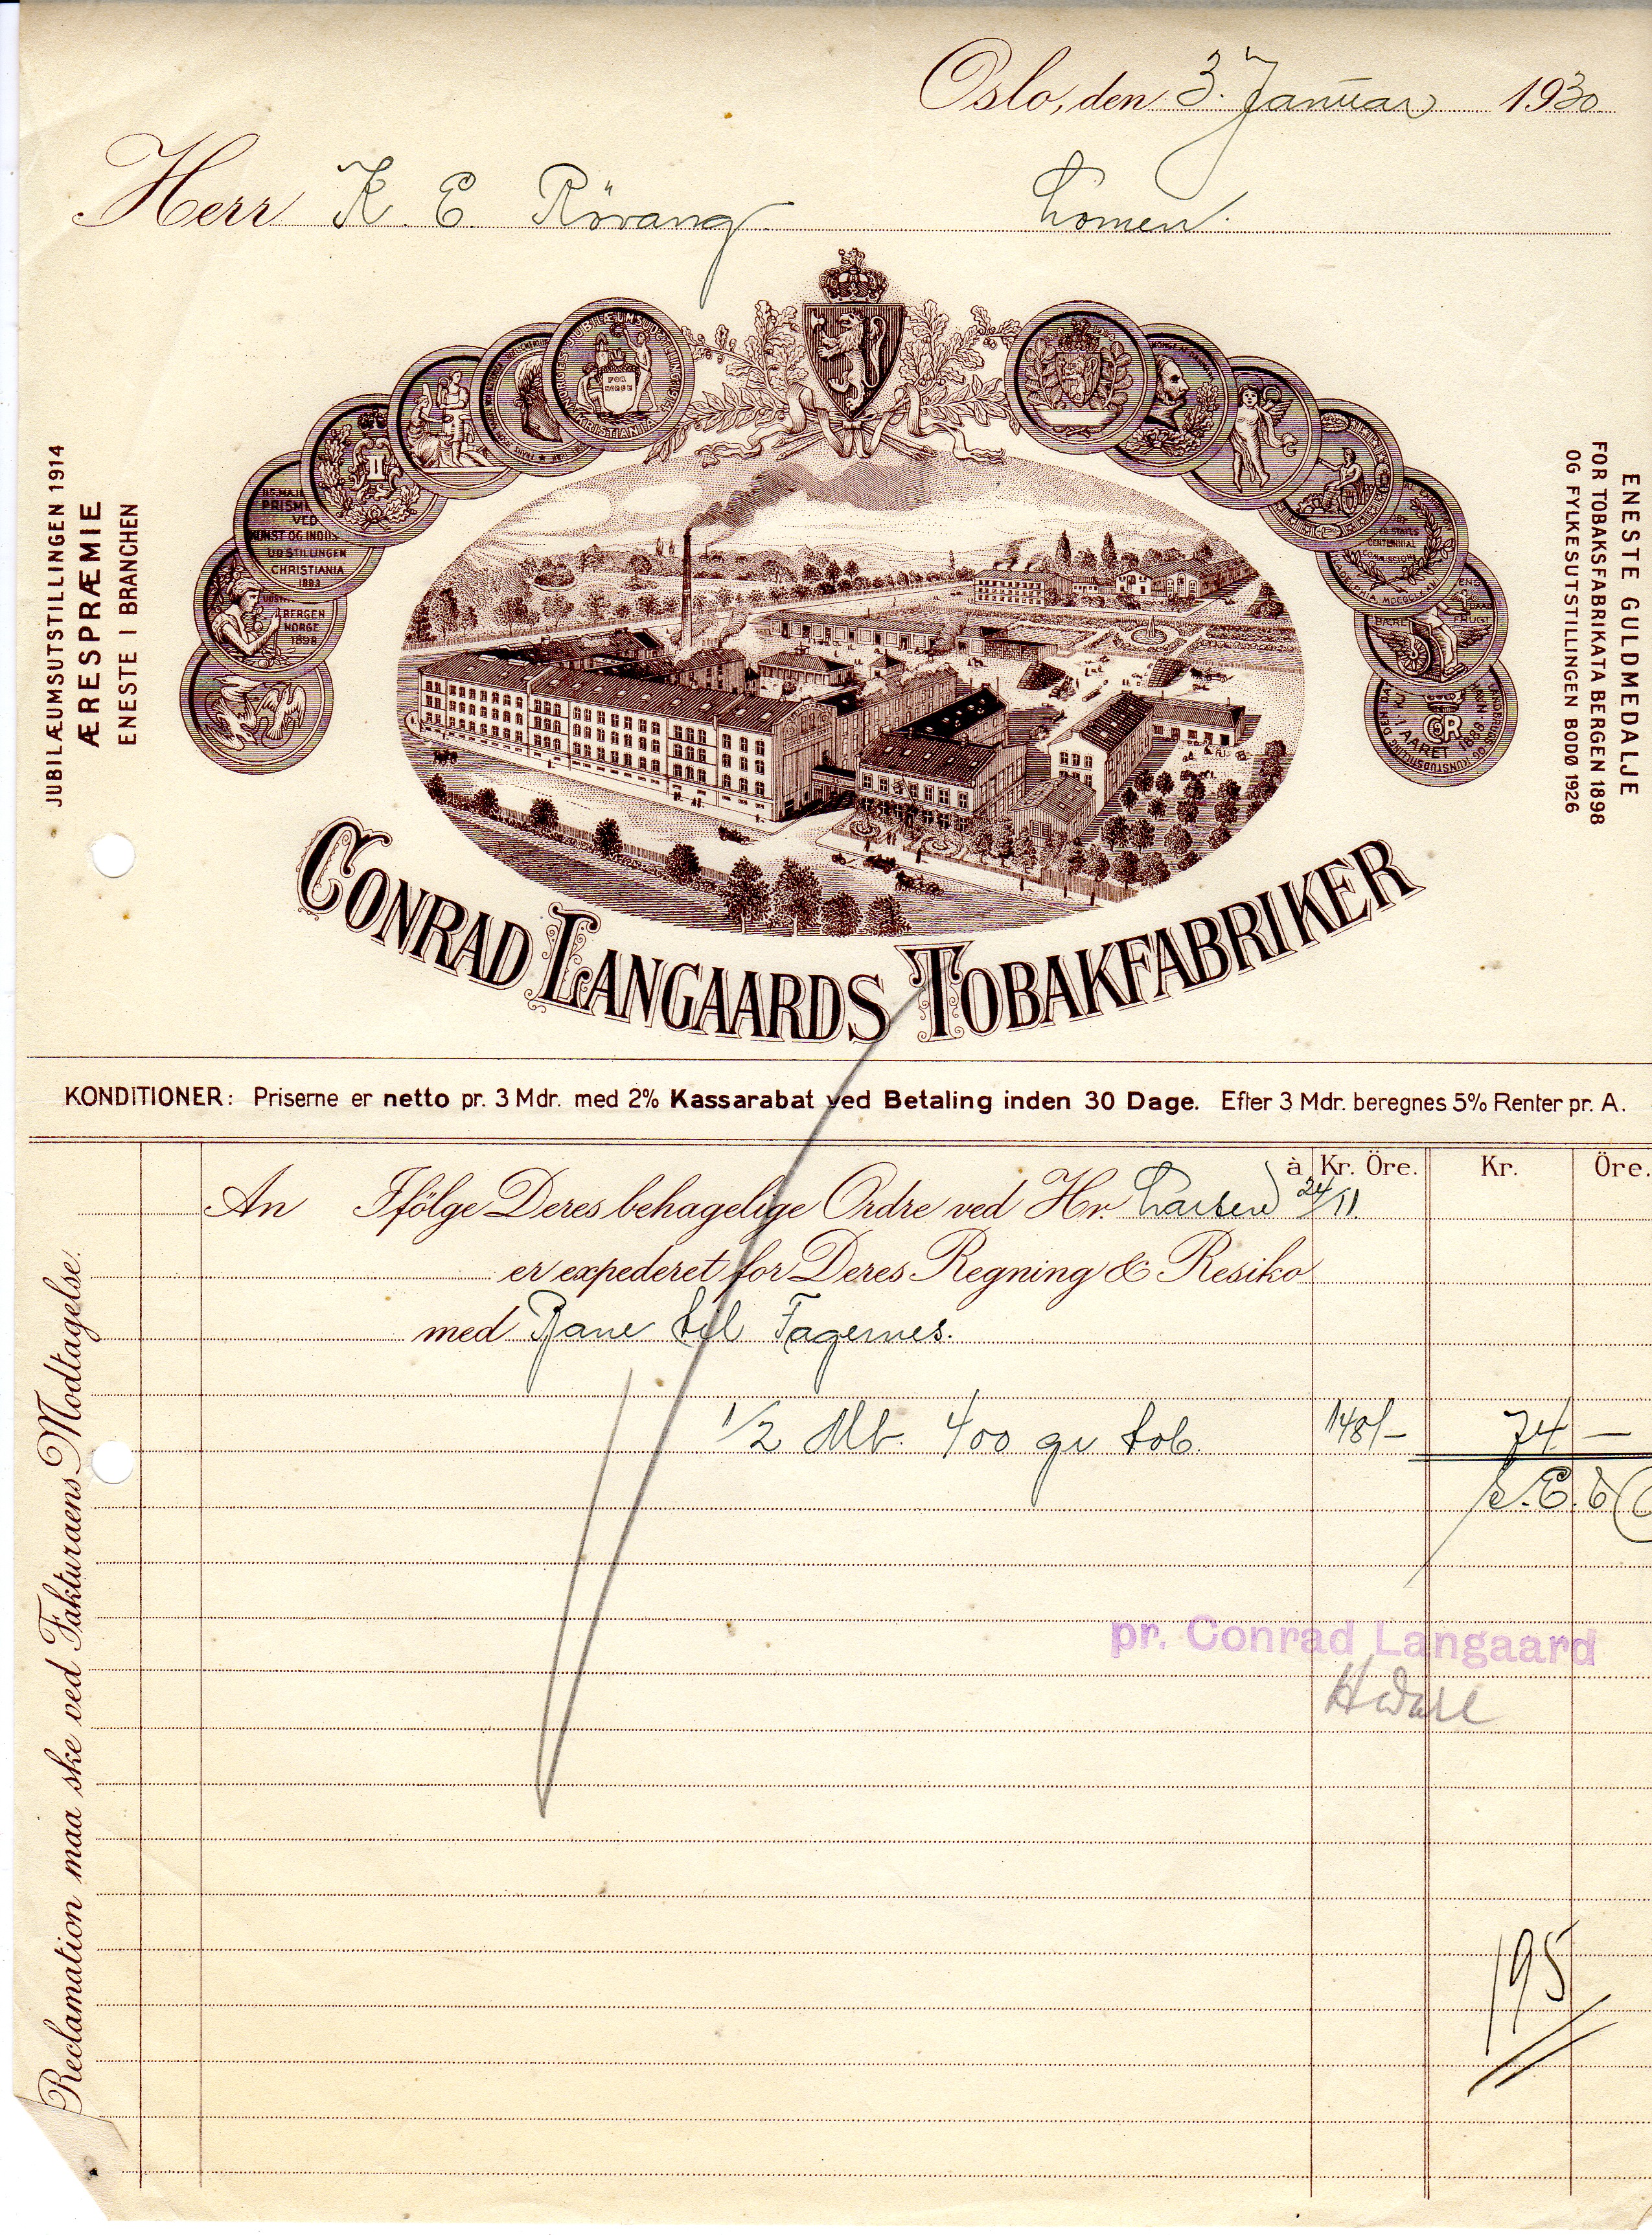 Conrad Langaards Tobakfabriker 1927 og 1930 pris pr stk